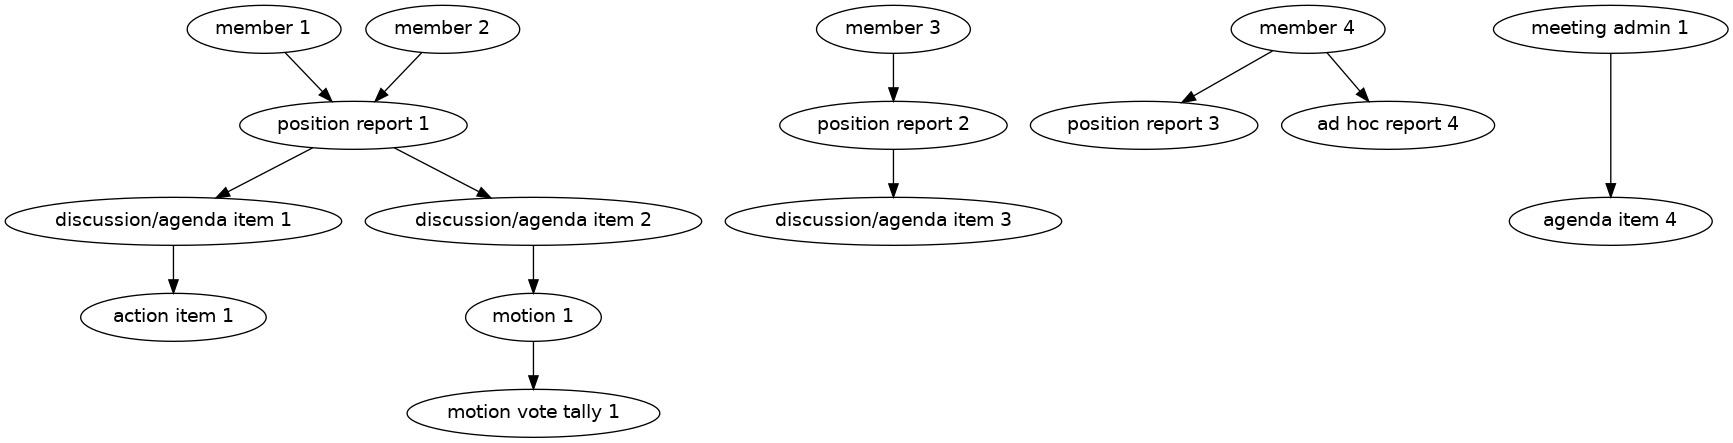 digraph records {
     graph [fontname = "helvetica"];
     node [fontname = "helvetica"];
     edge [fontname = "helvetica"];
     "member 1" -> "position report 1";
     "member 2" -> "position report 1";
     "member 3" -> "position report 2";
     "member 4" -> "position report 3";
     "member 4" -> "ad hoc report 4";
     "meeting admin 1" -> "agenda item 4";
     "position report 1" -> "discussion/agenda item 1";
     "position report 1" -> "discussion/agenda item 2";
     "position report 2" -> "discussion/agenda item 3";
     "discussion/agenda item 1" -> "action item 1";
     "discussion/agenda item 2" -> "motion 1";
     "motion 1" -> "motion vote tally 1";
     { rank=same; "member 1", "member 2", "member 3", "member 4", "meeting admin 1" };
     { rank=same; "position report 1", "position report 2", "position report 3", "ad hoc report 4" };
     { rank=same; "discussion/agenda item 1", "discussion/agenda item 2", "discussion/agenda item 3", "agenda item 4" };
     { rank=same; "action item 1", "motion 1" };
 }